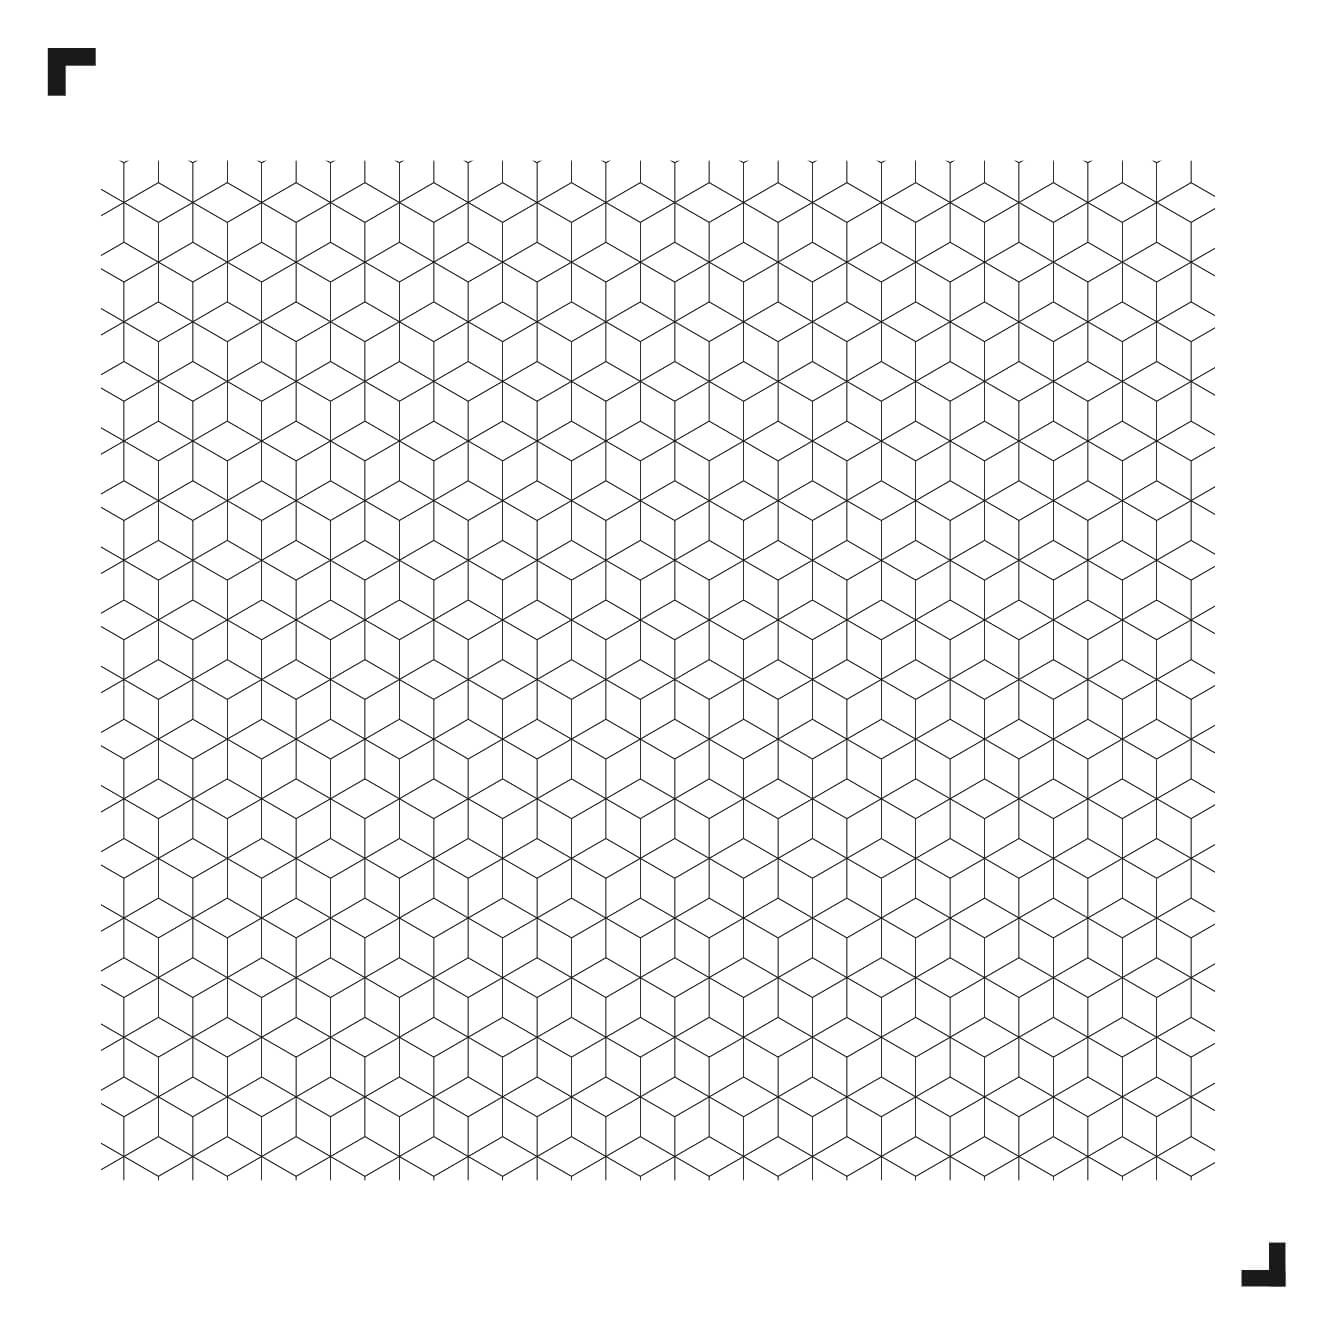 black & white drawing of the Diamond pattern - Moduleo Moods - Luxury Vinyl Tiles - Creative flooring